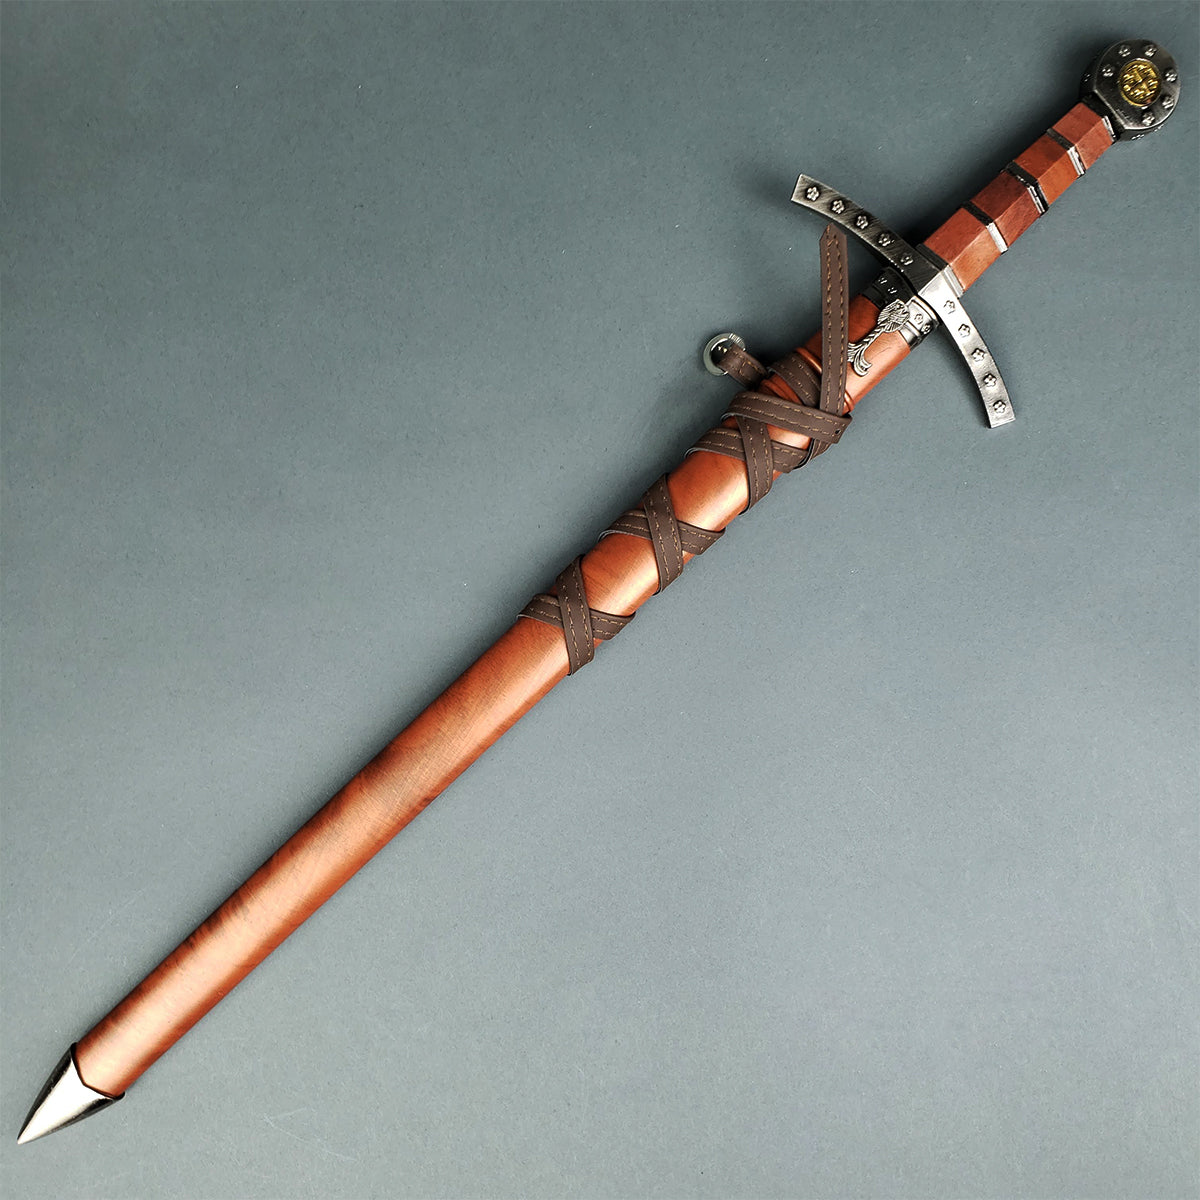 Buy Medieval Swords in Bulk - Wholesale Medieval Templar Swords